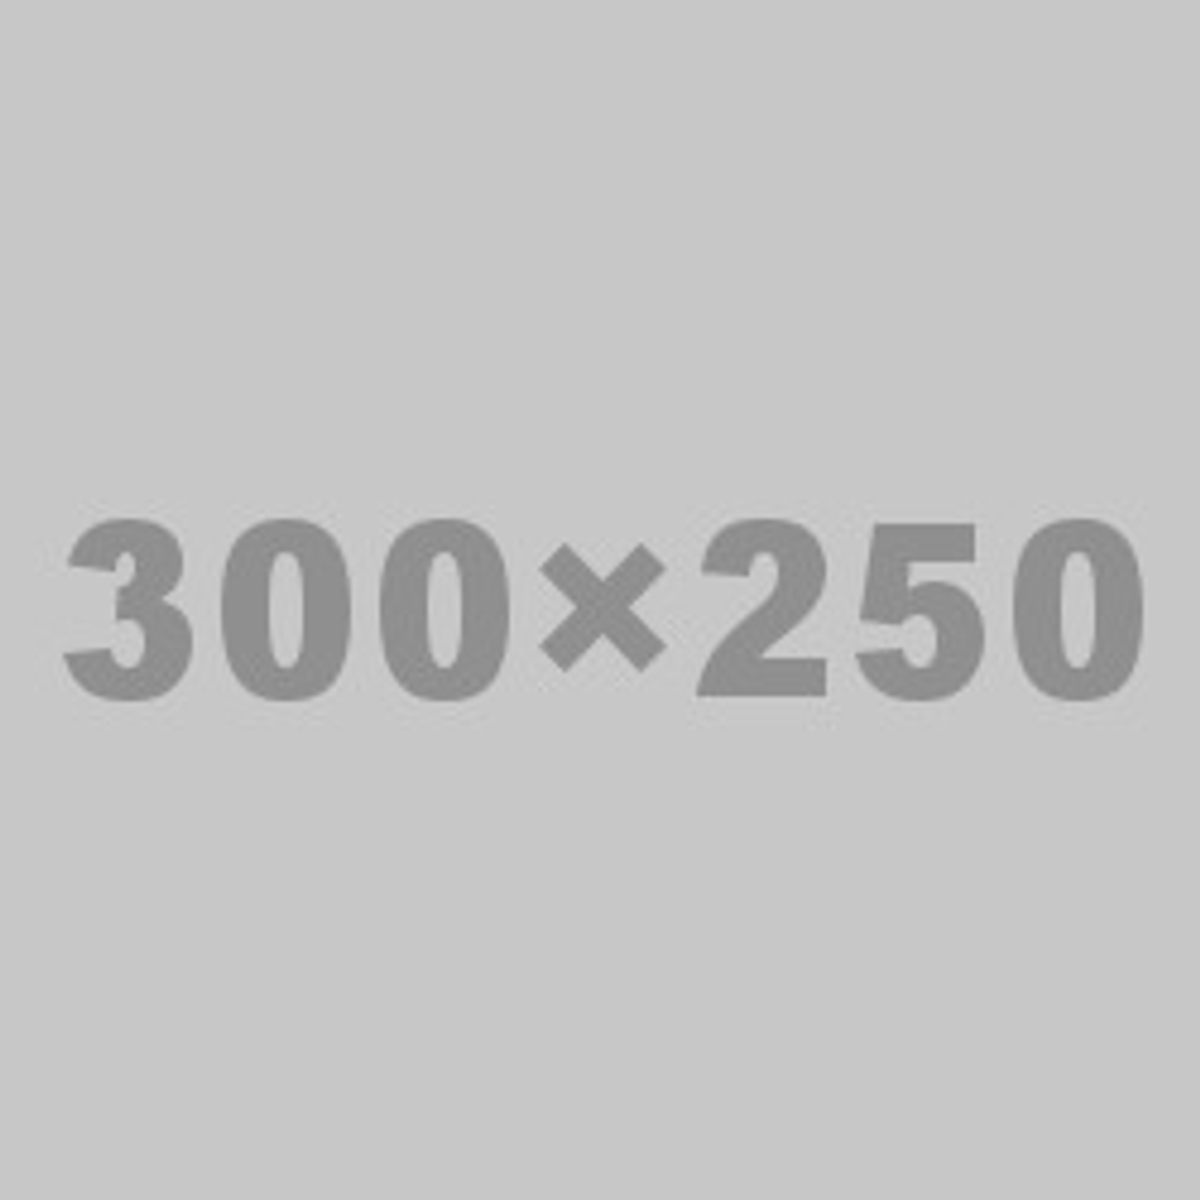 400:100 Изображение. Изображения 300 на 250. Фото 300 на 300 пикселей. Картинка 300x250.